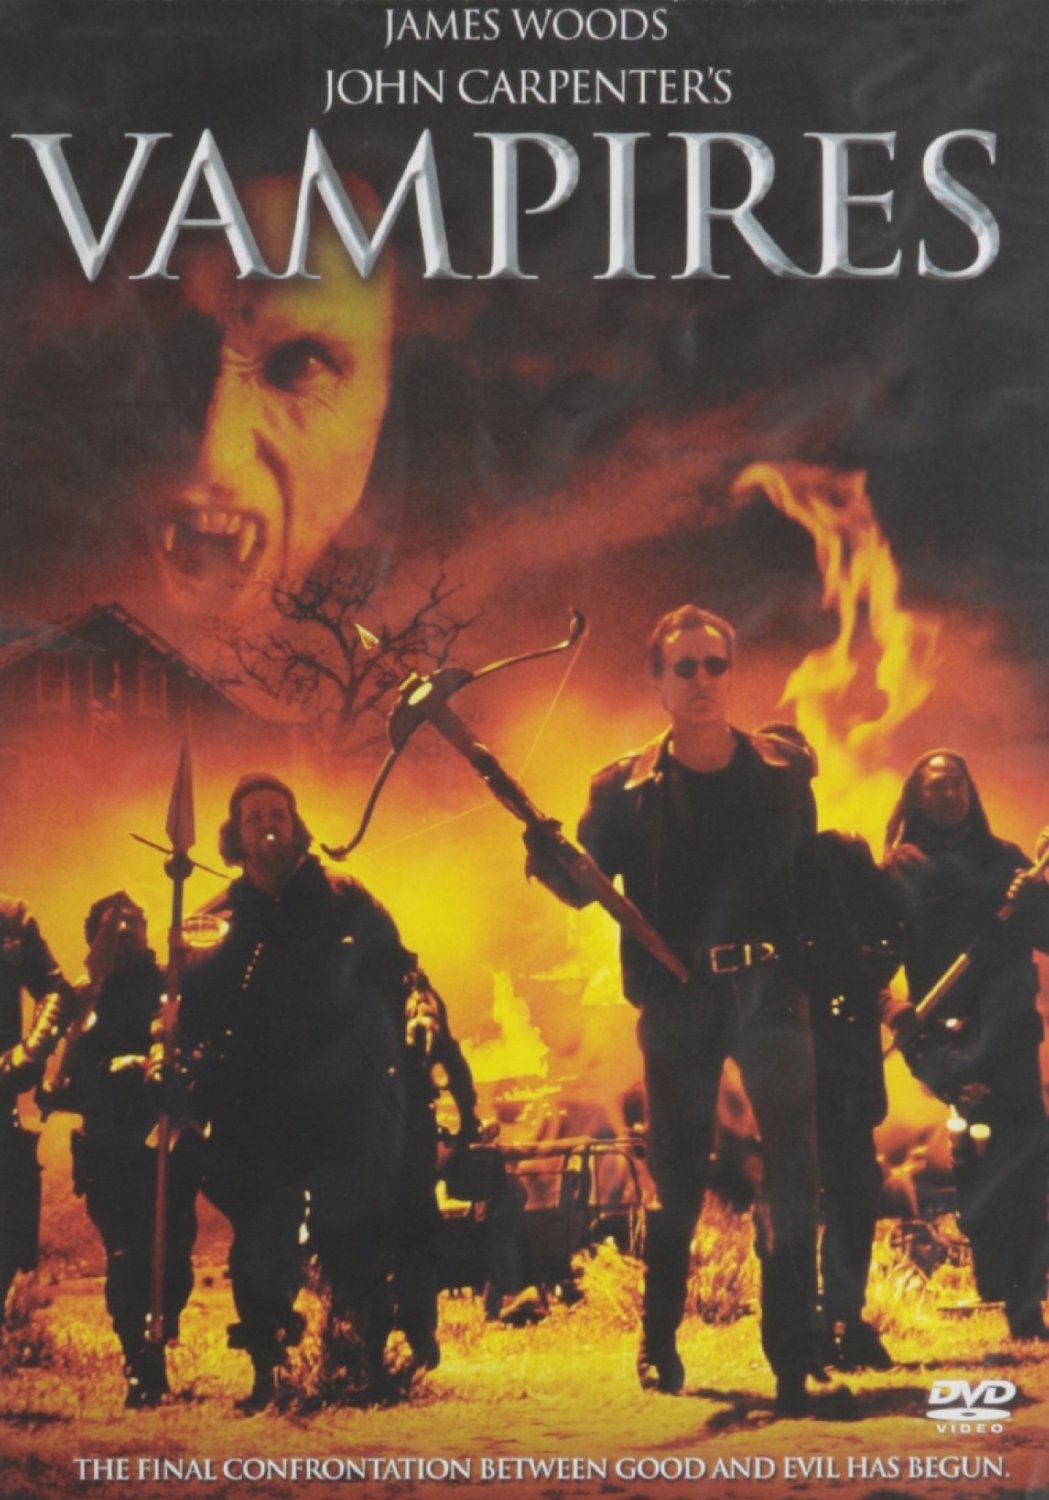 John Carpenter's Vampires (1998) starring James Woods, Daniel Baldwin, Sheryl Lee, Thomas Ian Griffith, Maximilian Schell